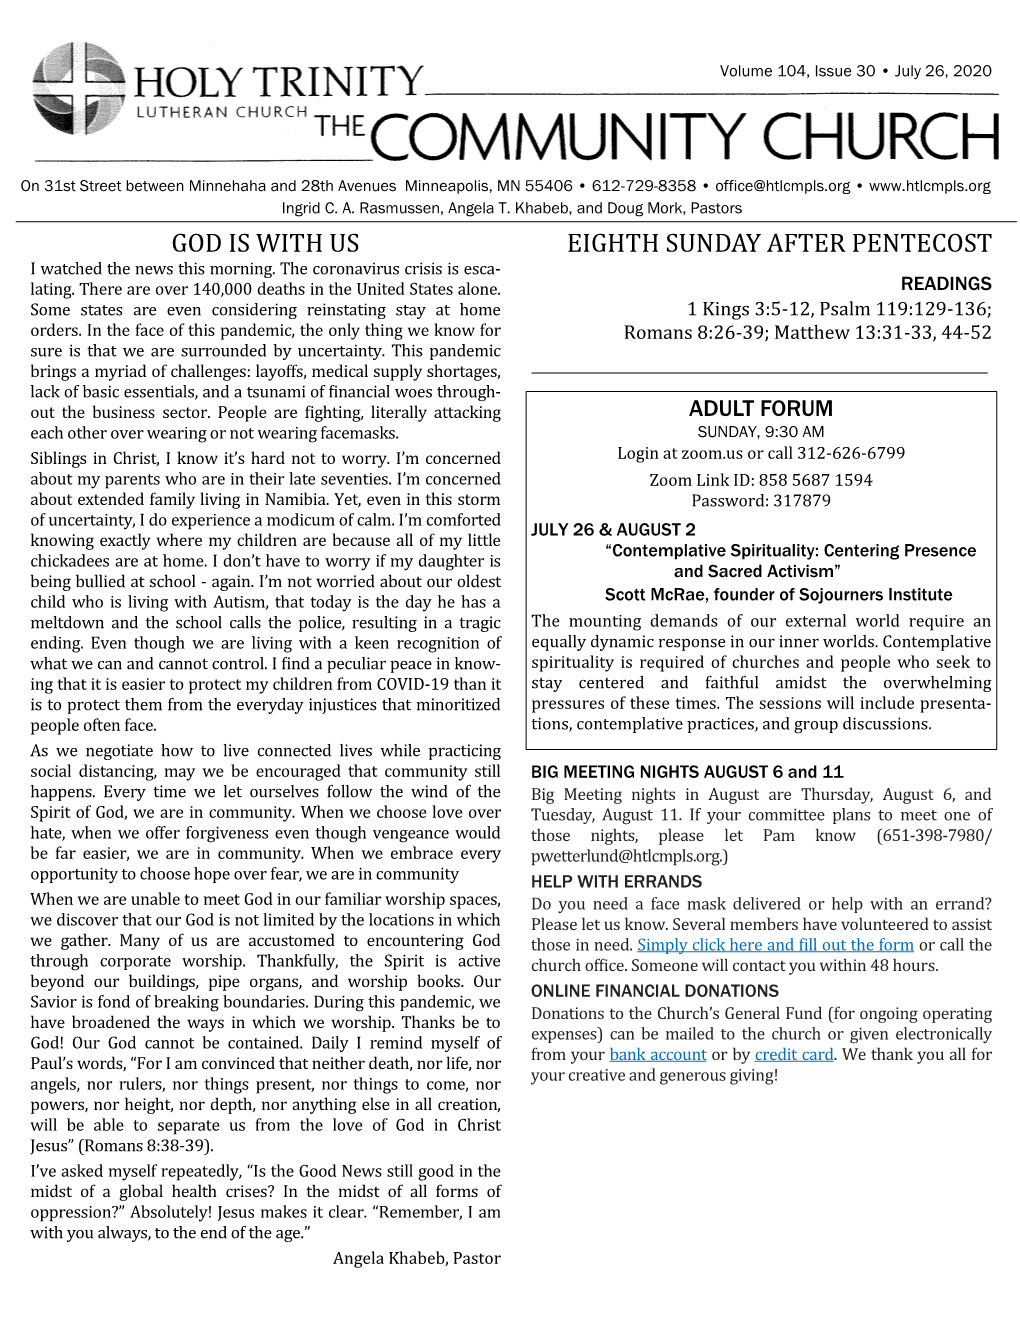 The Community Church Newsletter